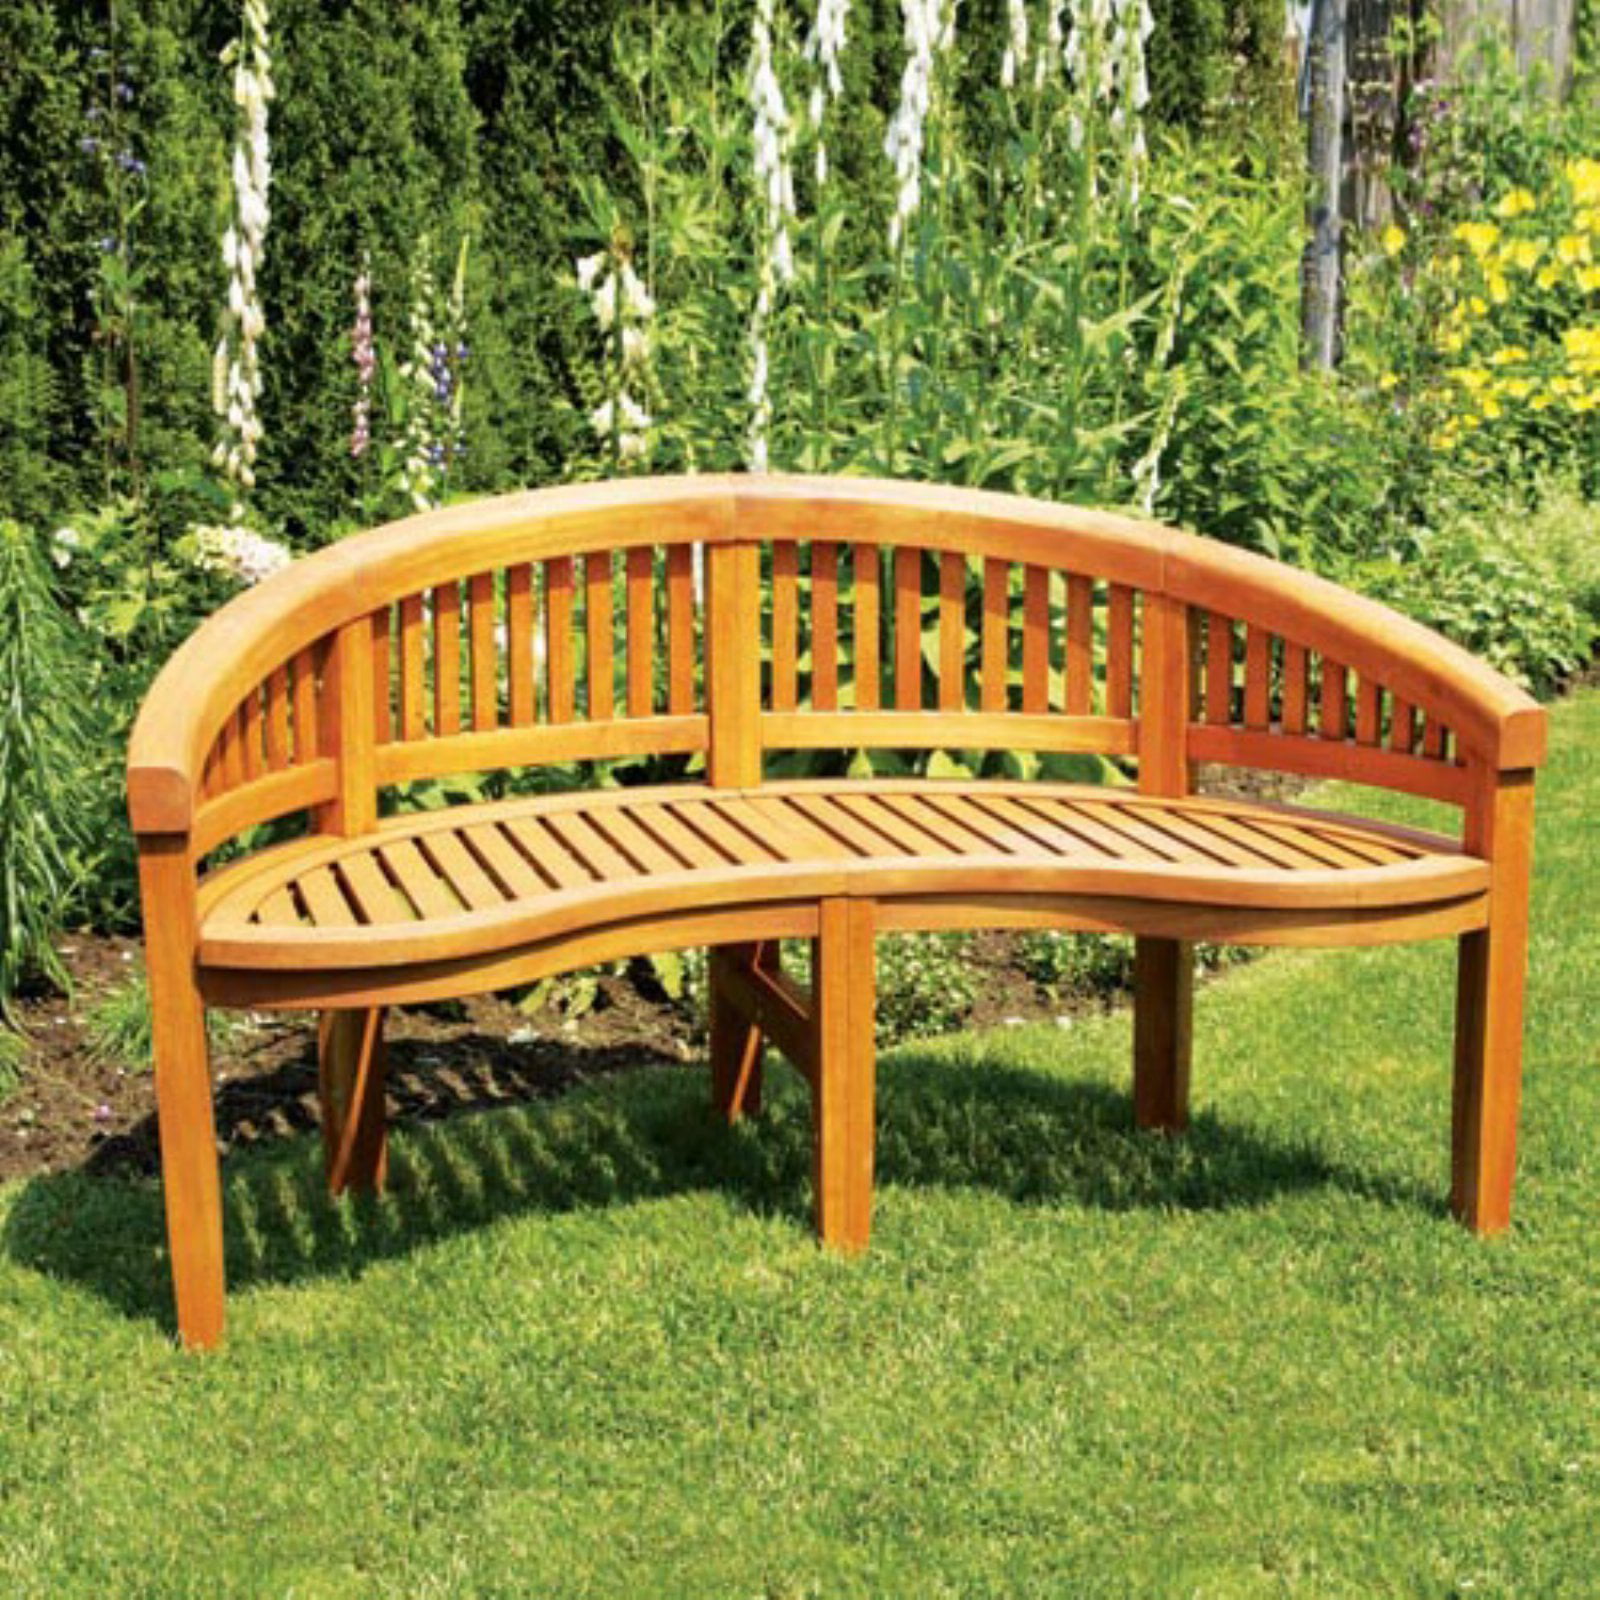  garden bench design